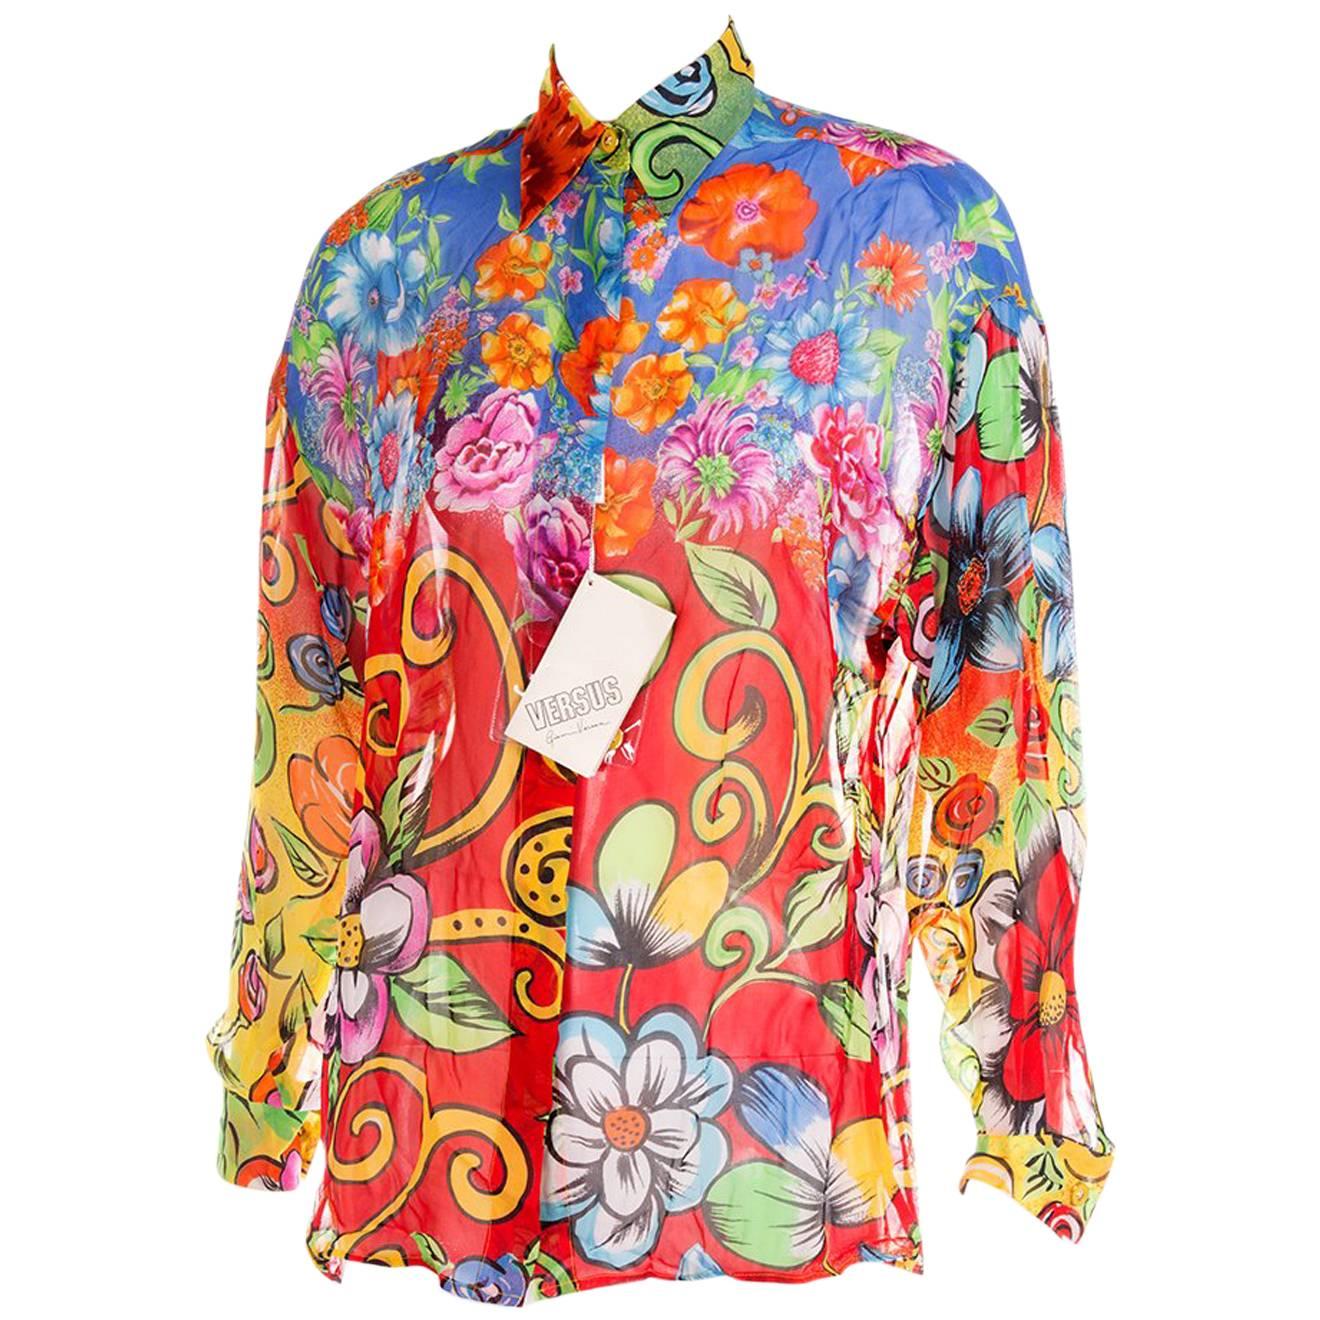 Versus Gianni Versace 90s Tropical Floral Print Shirt 